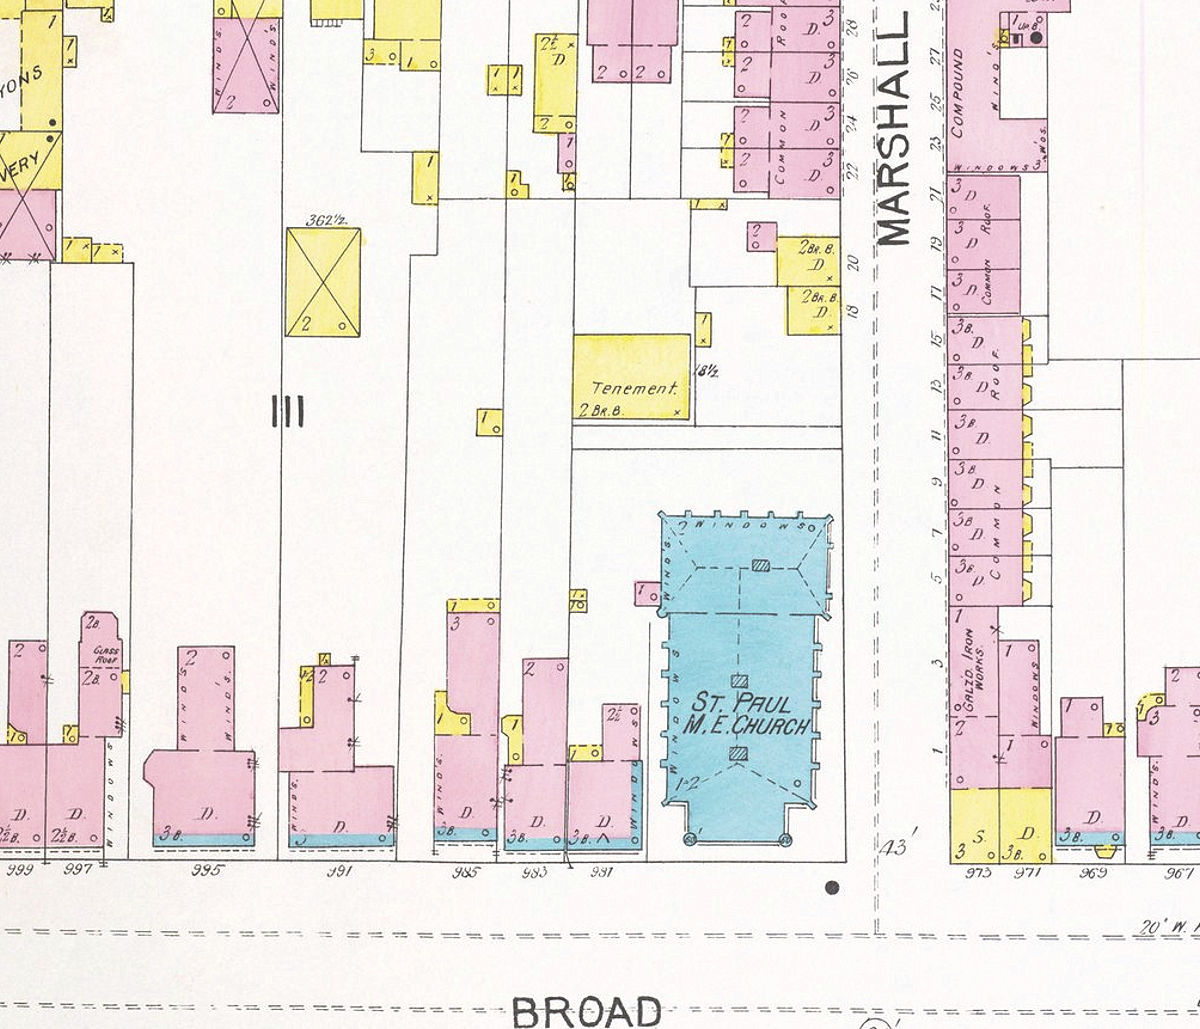 1892 Map
977 - 981 Broad Street
